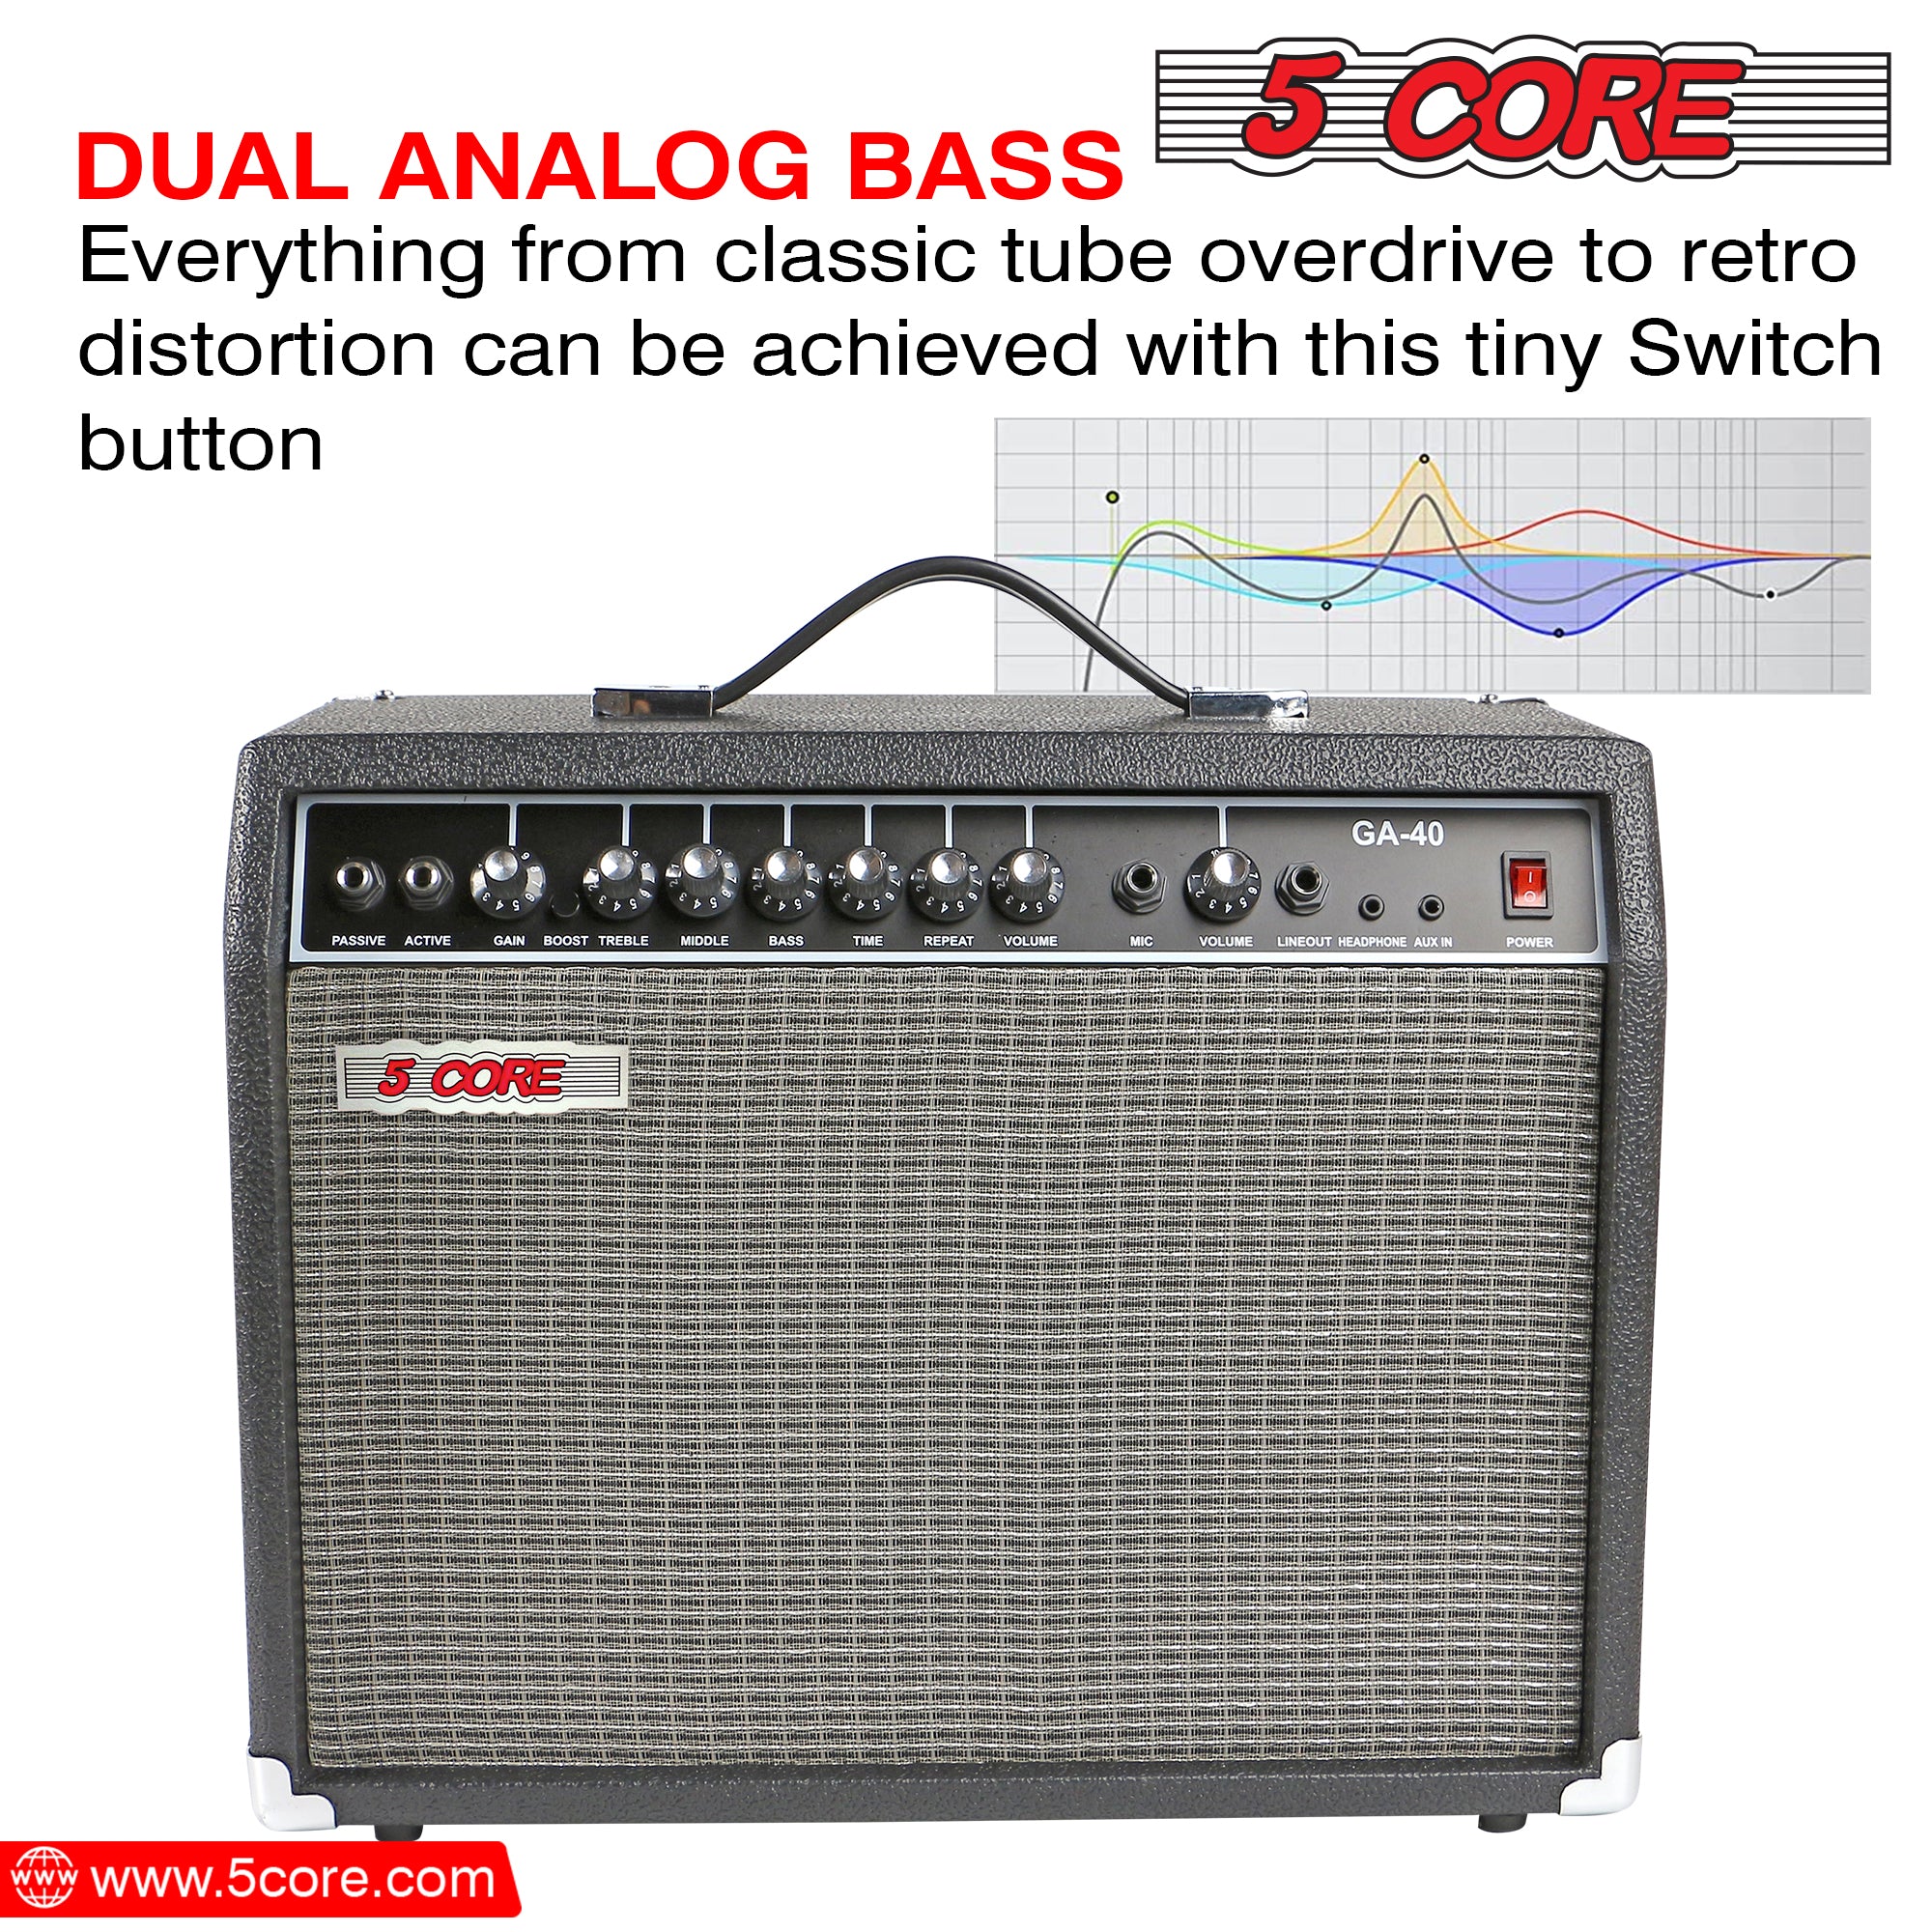 Dual analog bass